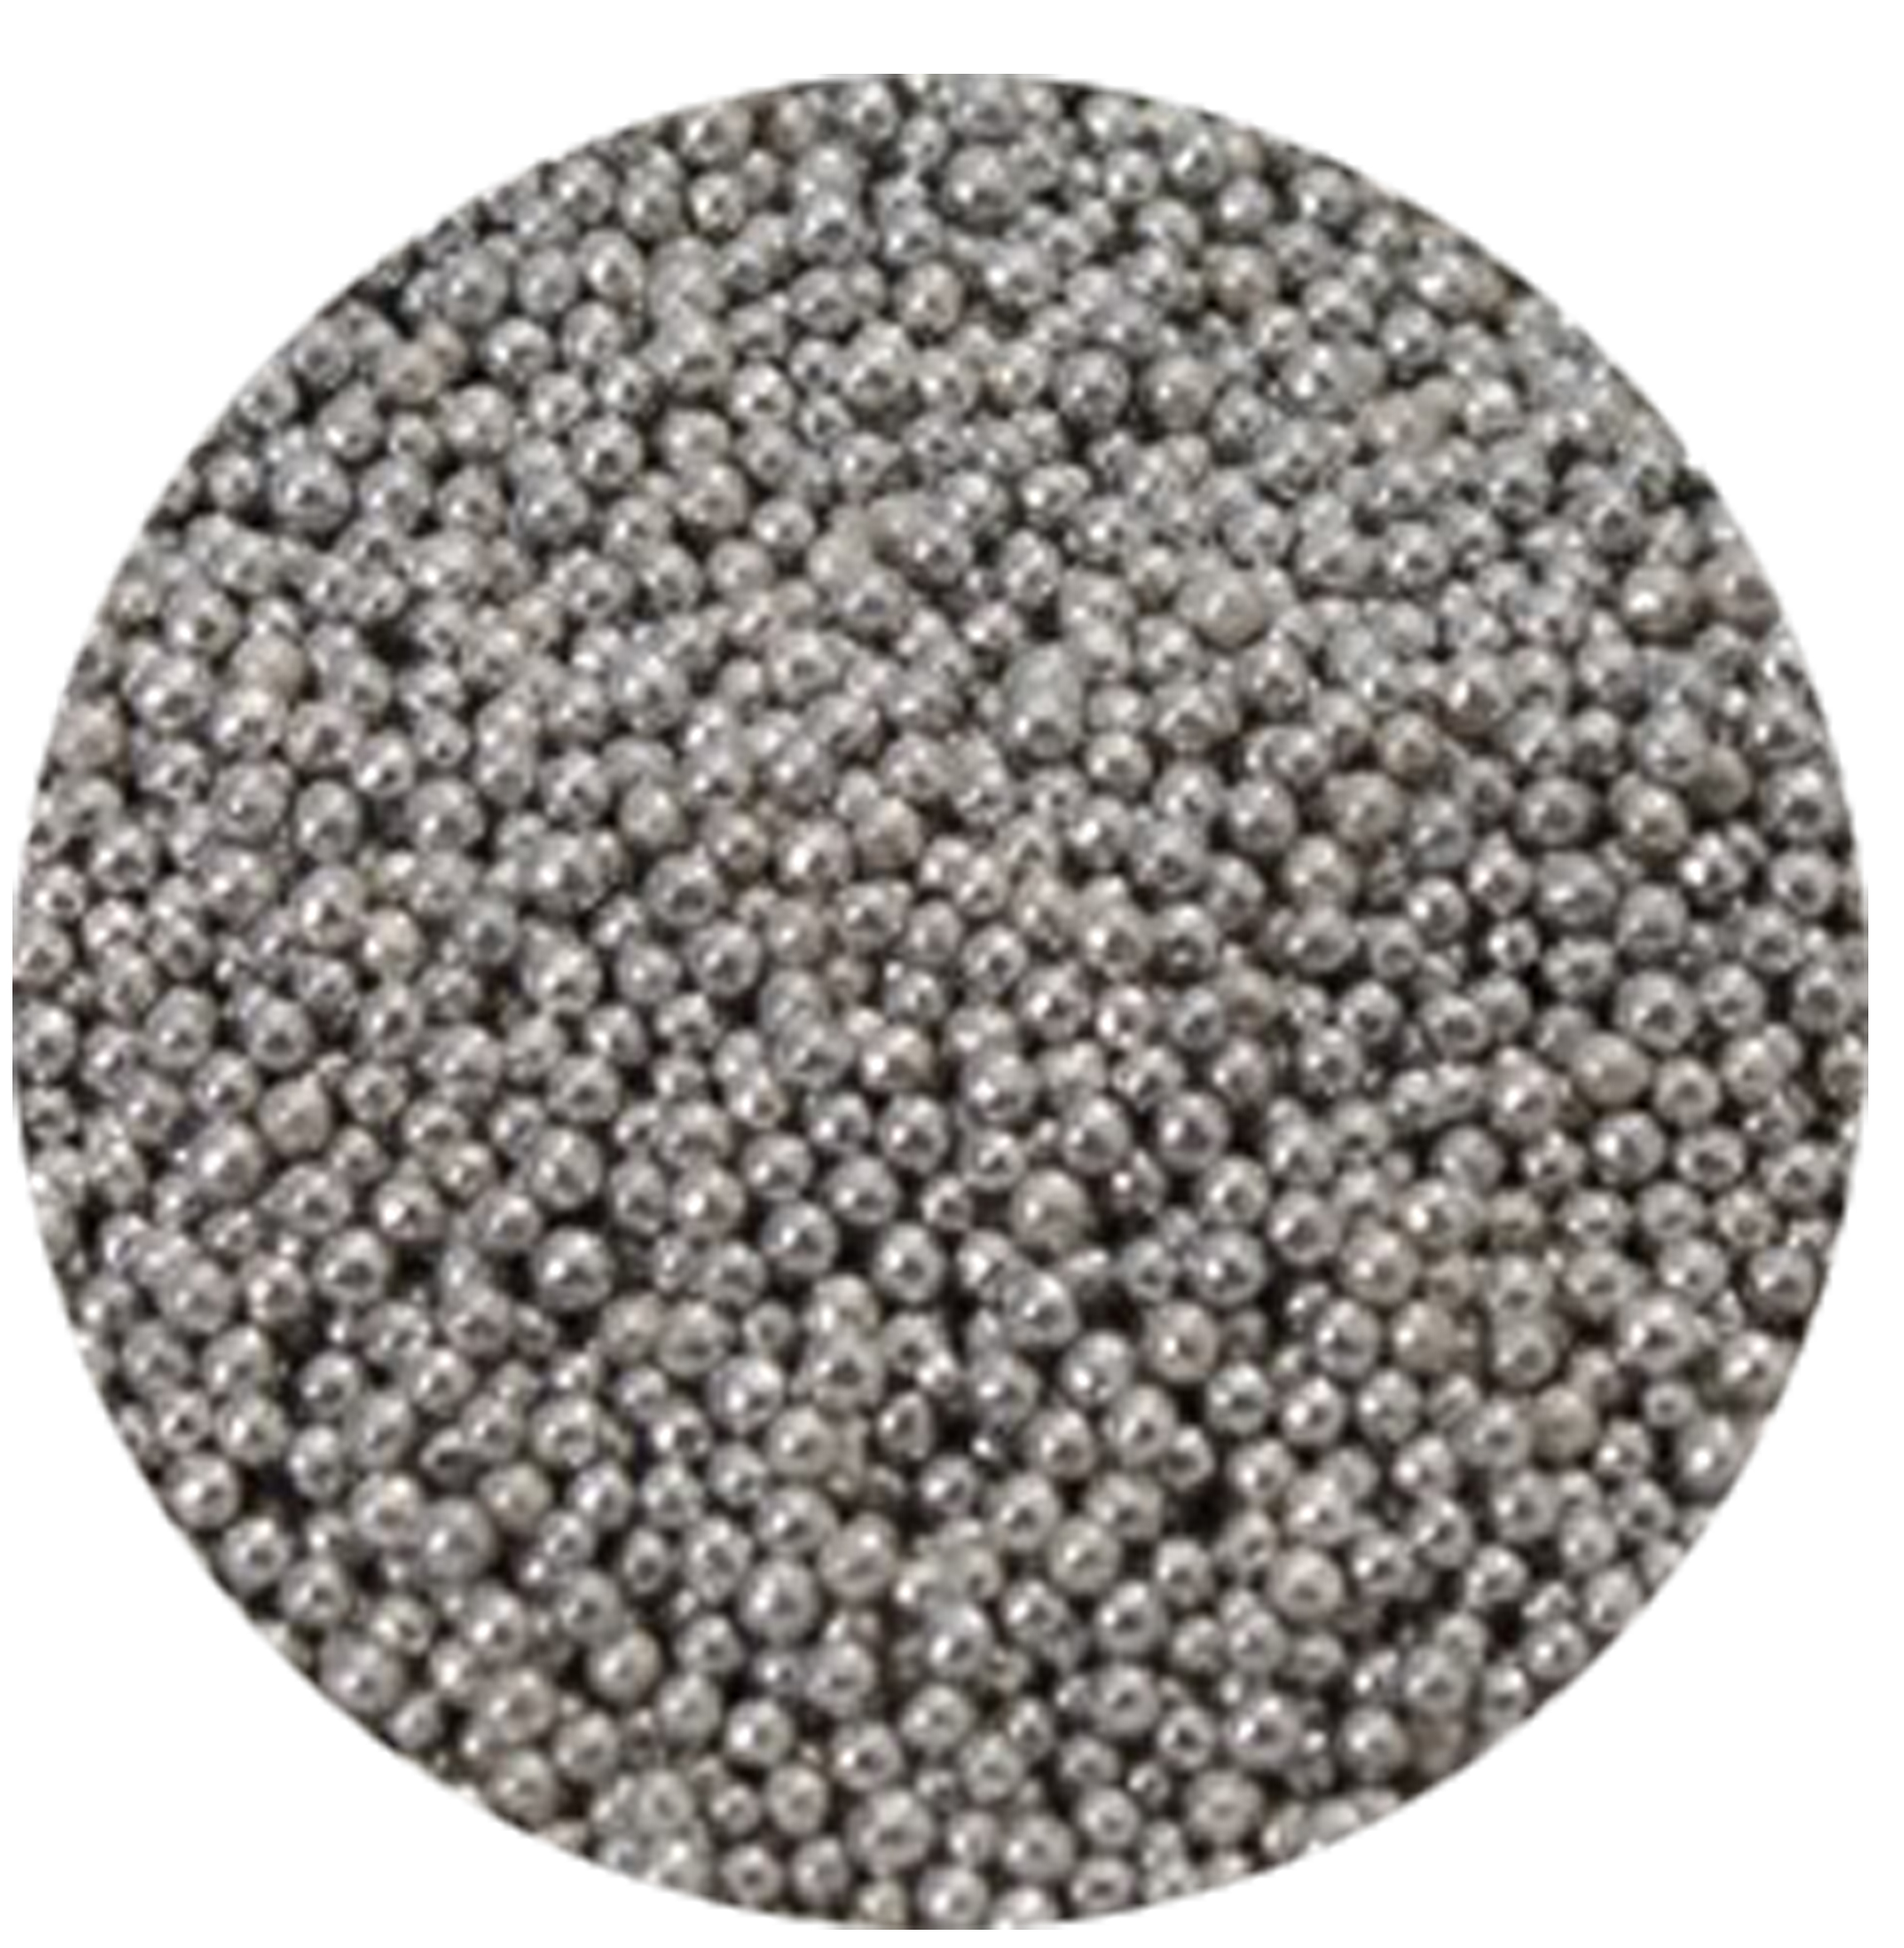 Mini-Perlen Nonpareils silber 80g